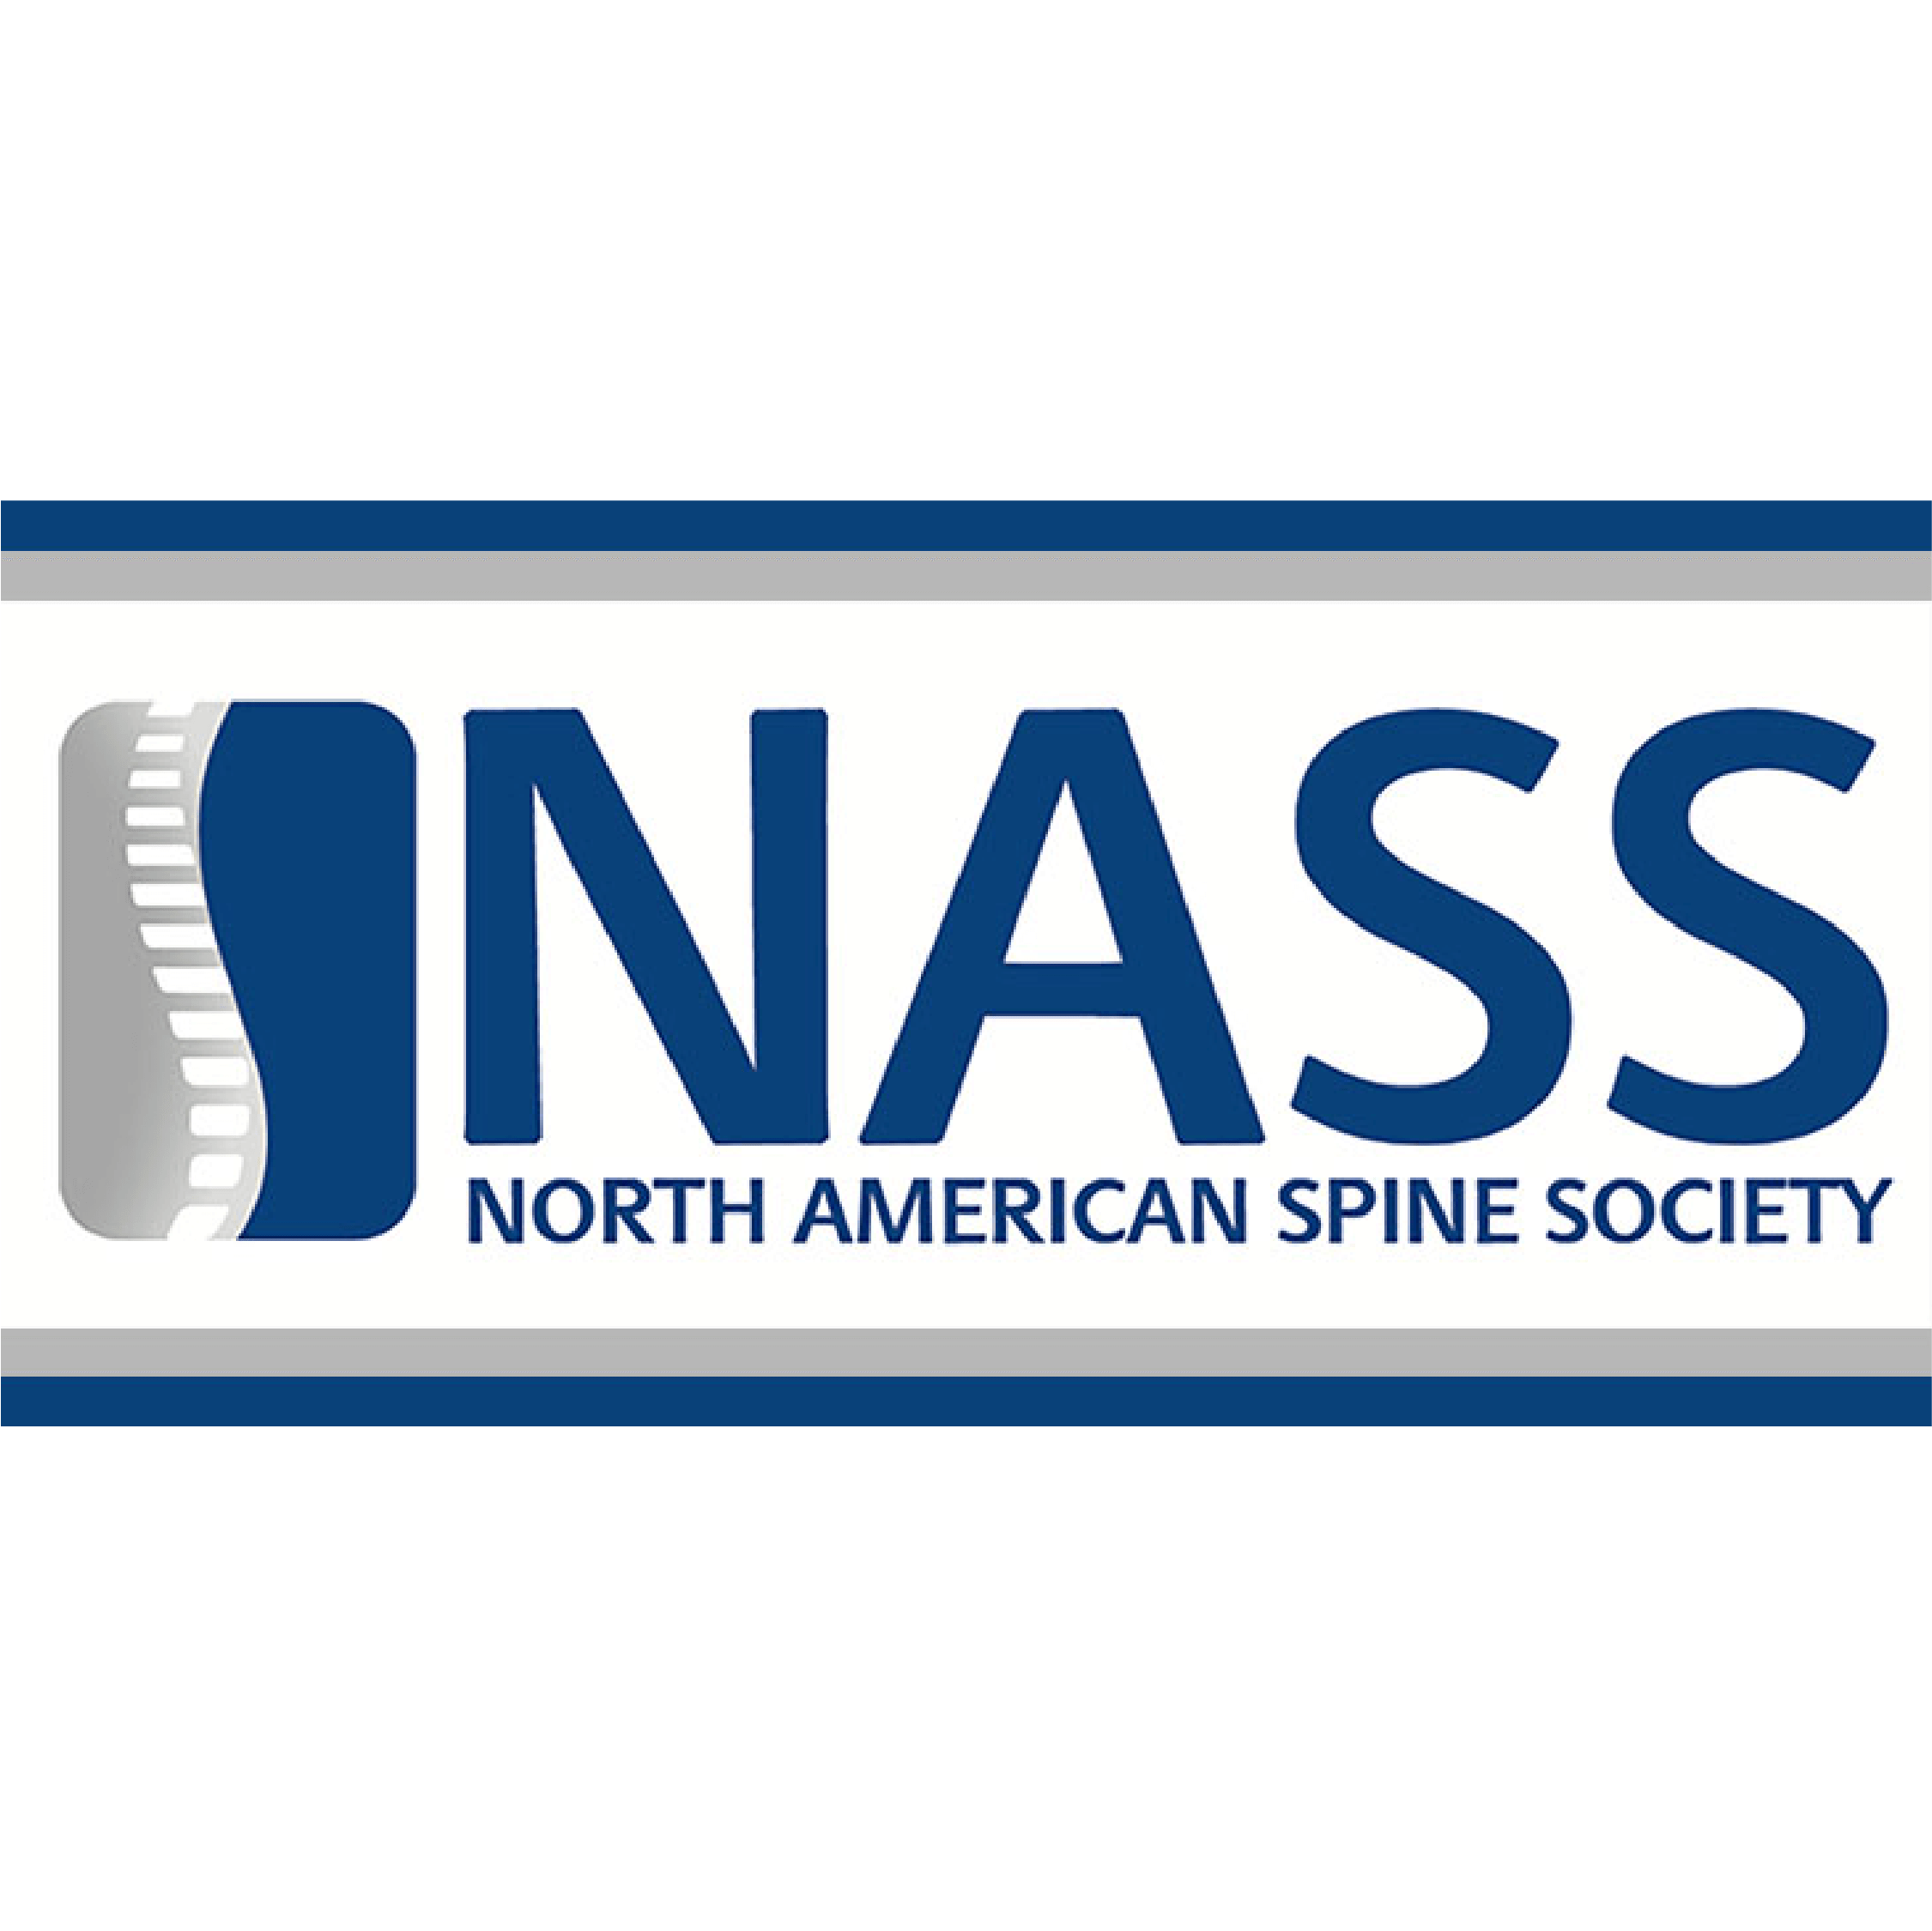 NASS - North American Spine Society